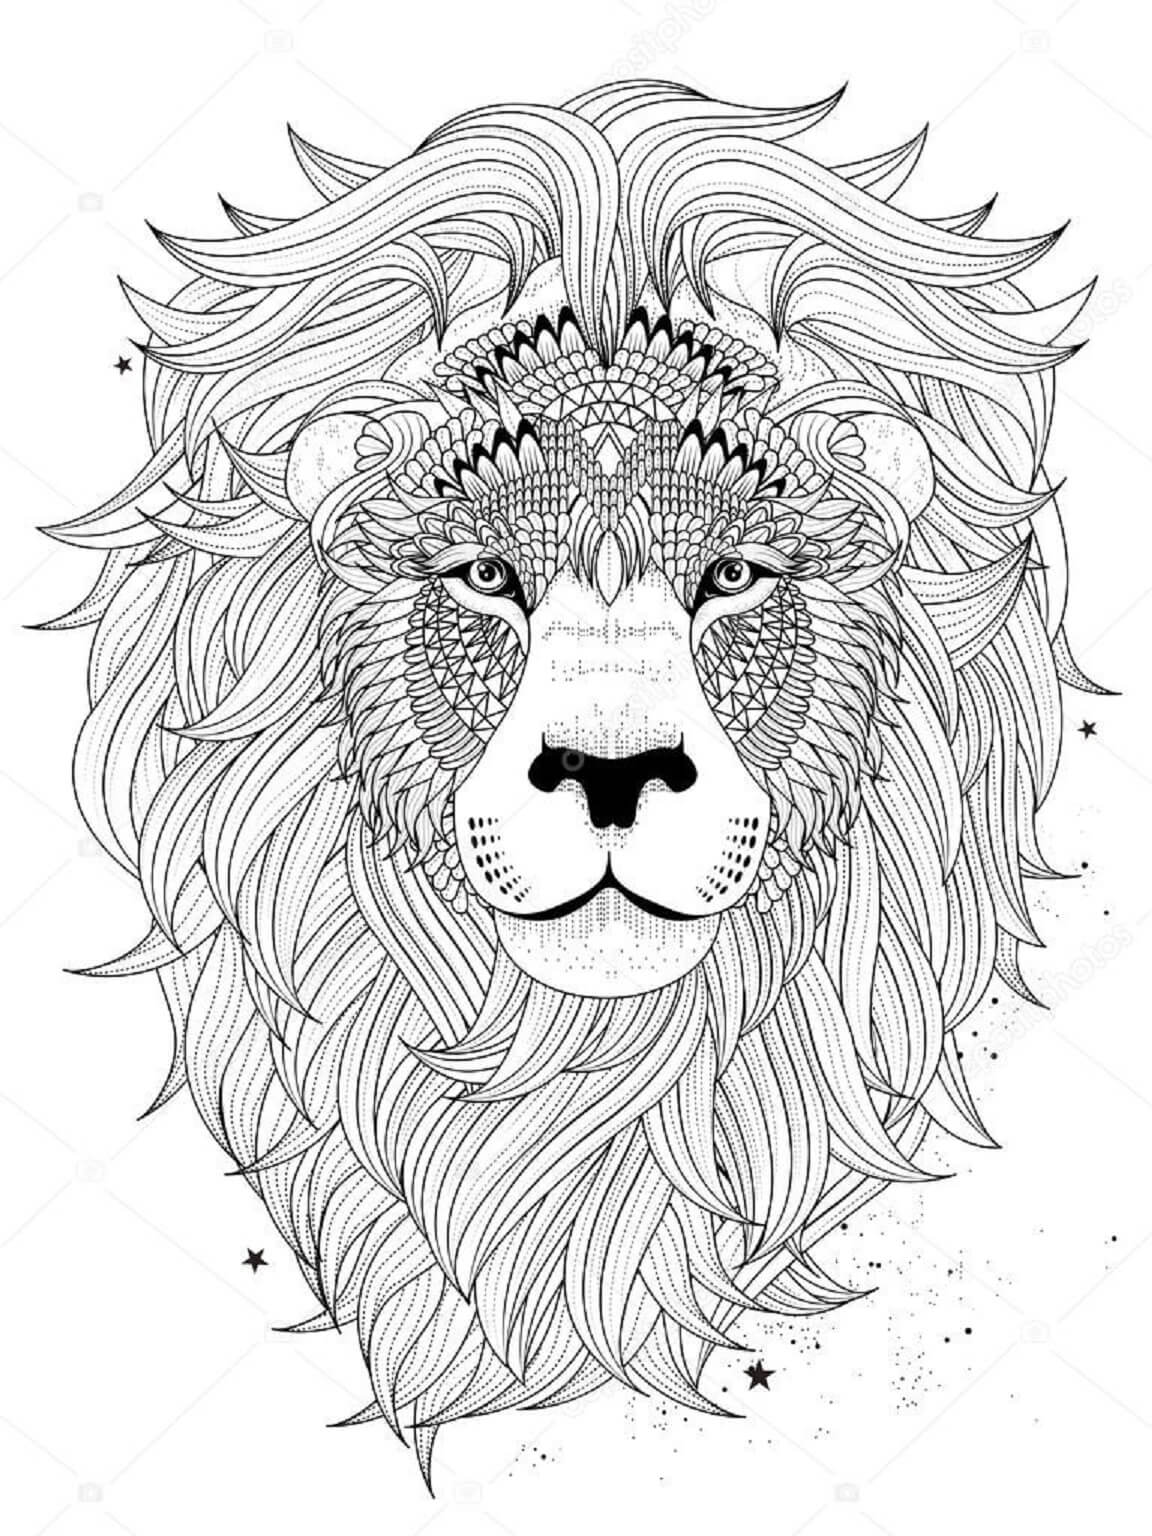 Mandala Lion Coloring Page - Sheet 3 Mandalas